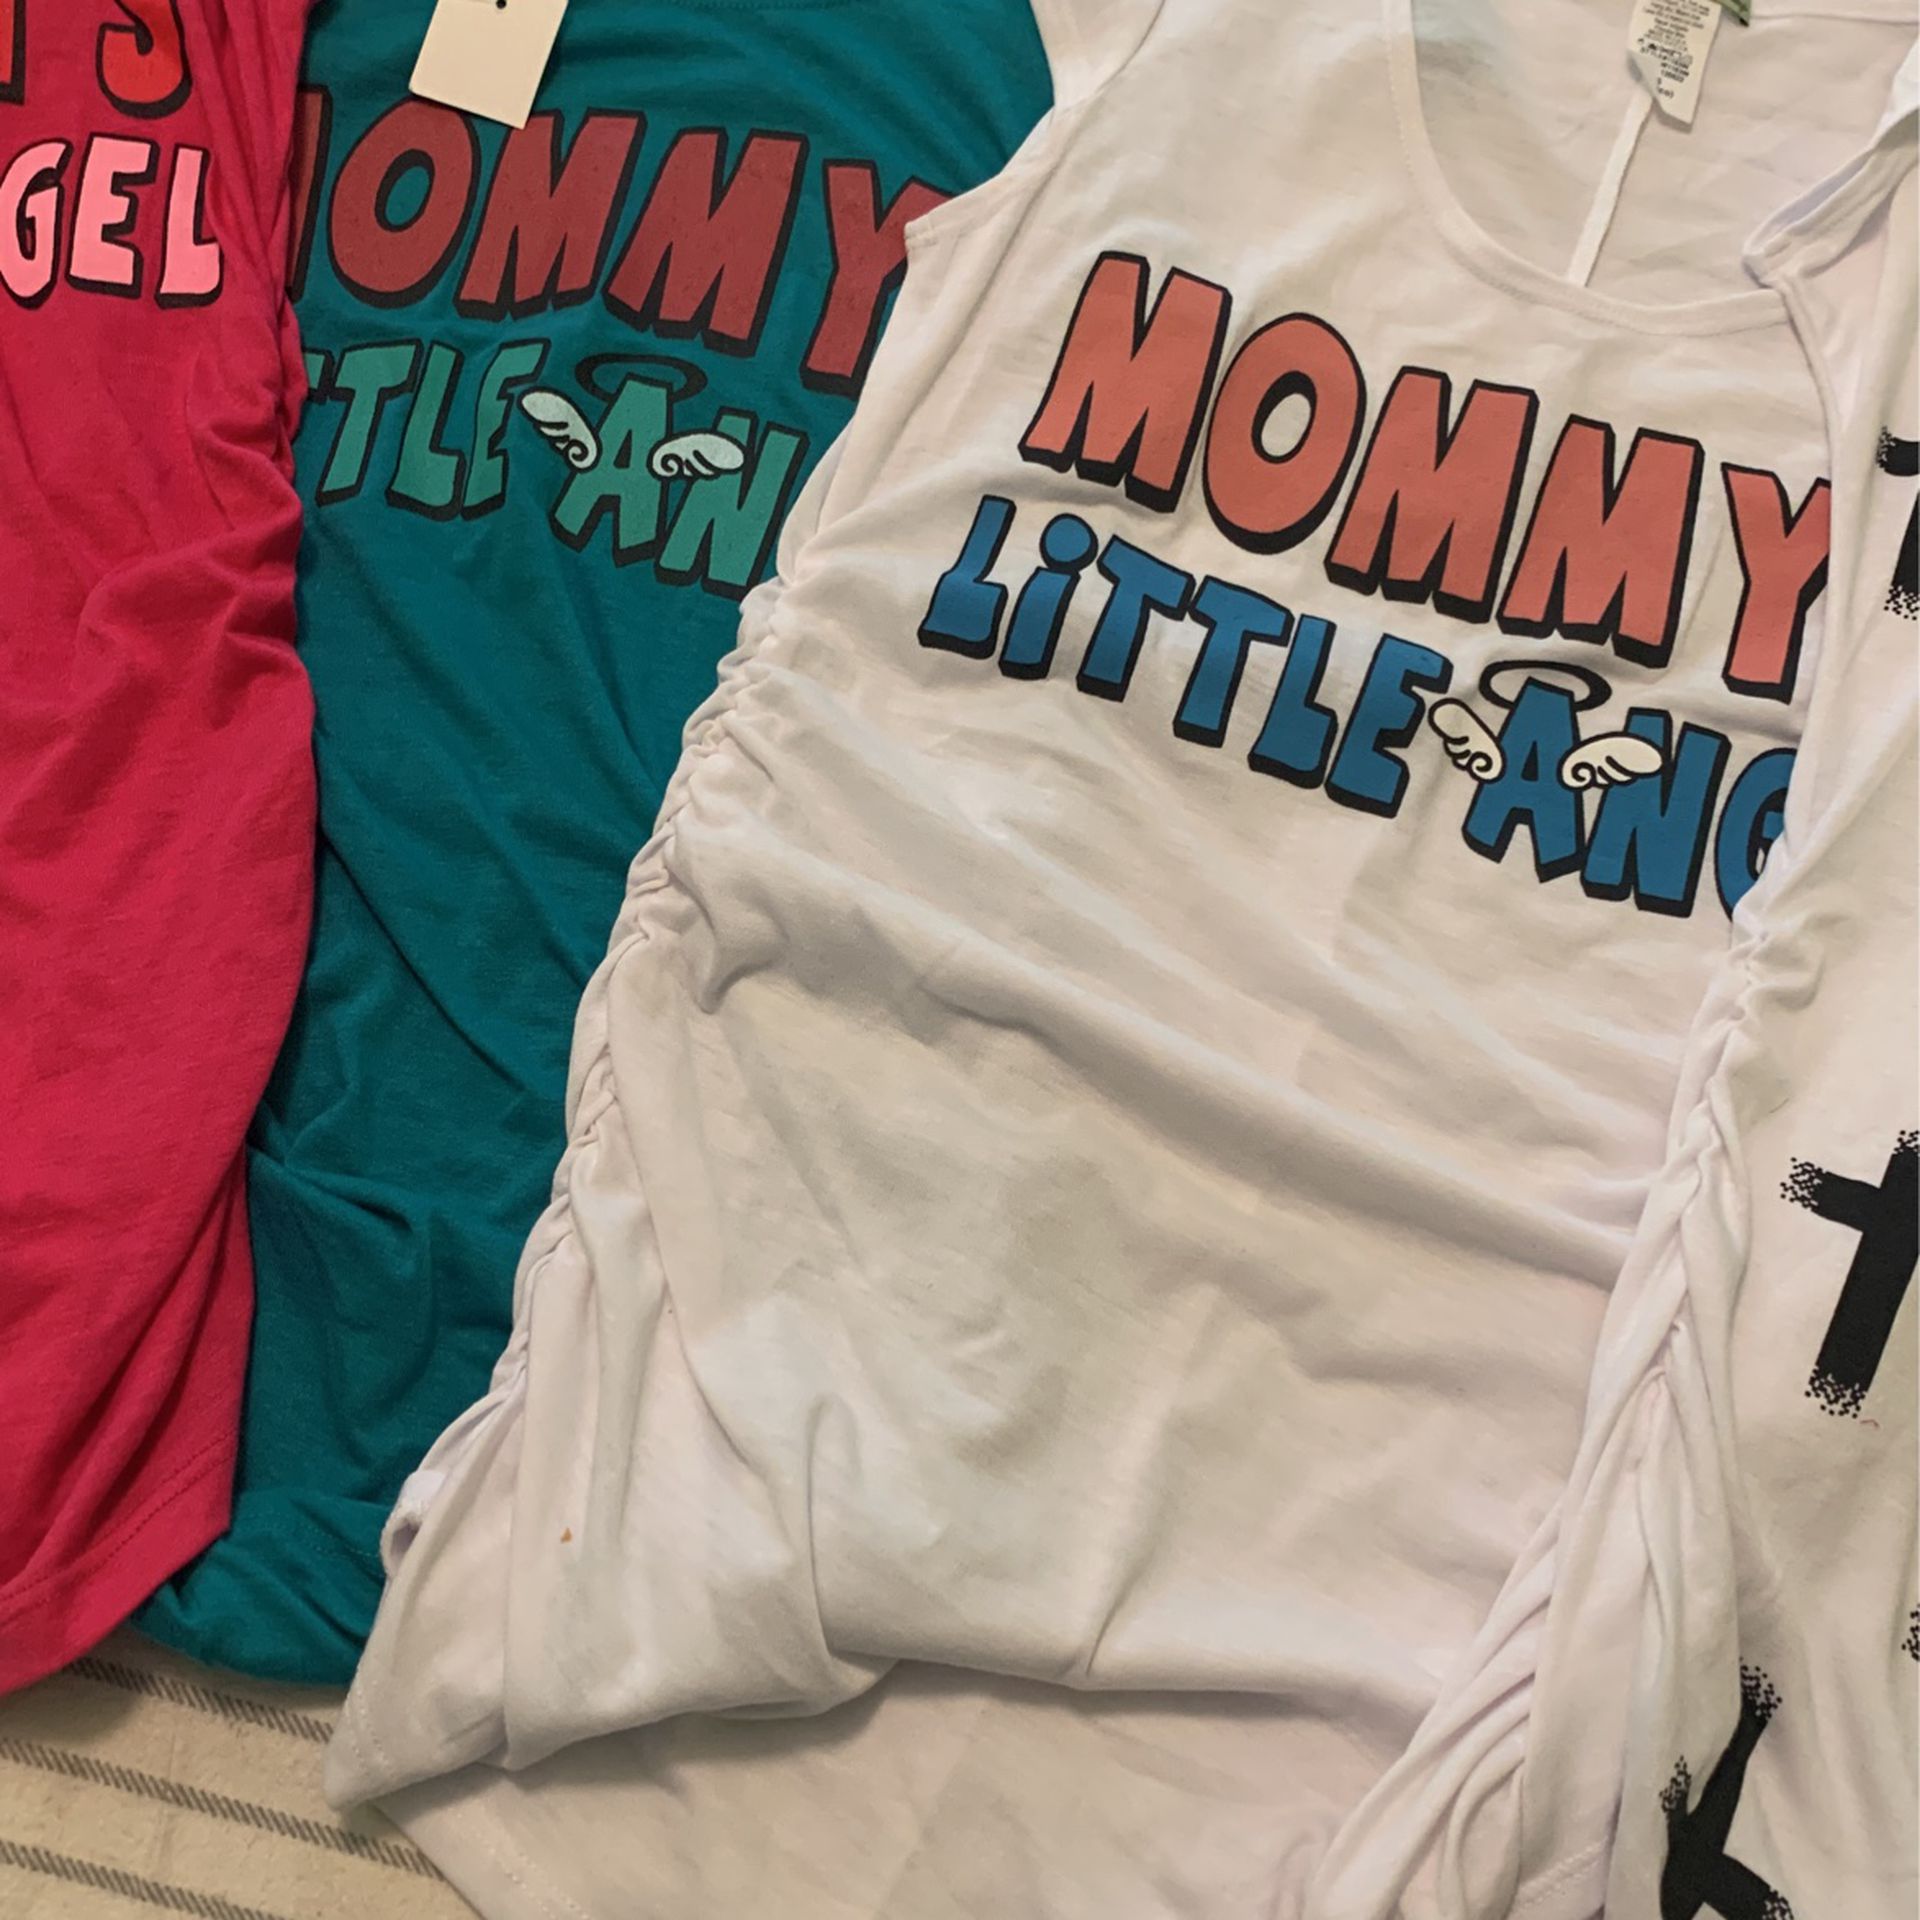 Maternity Shirts S,m, L $6 Each 